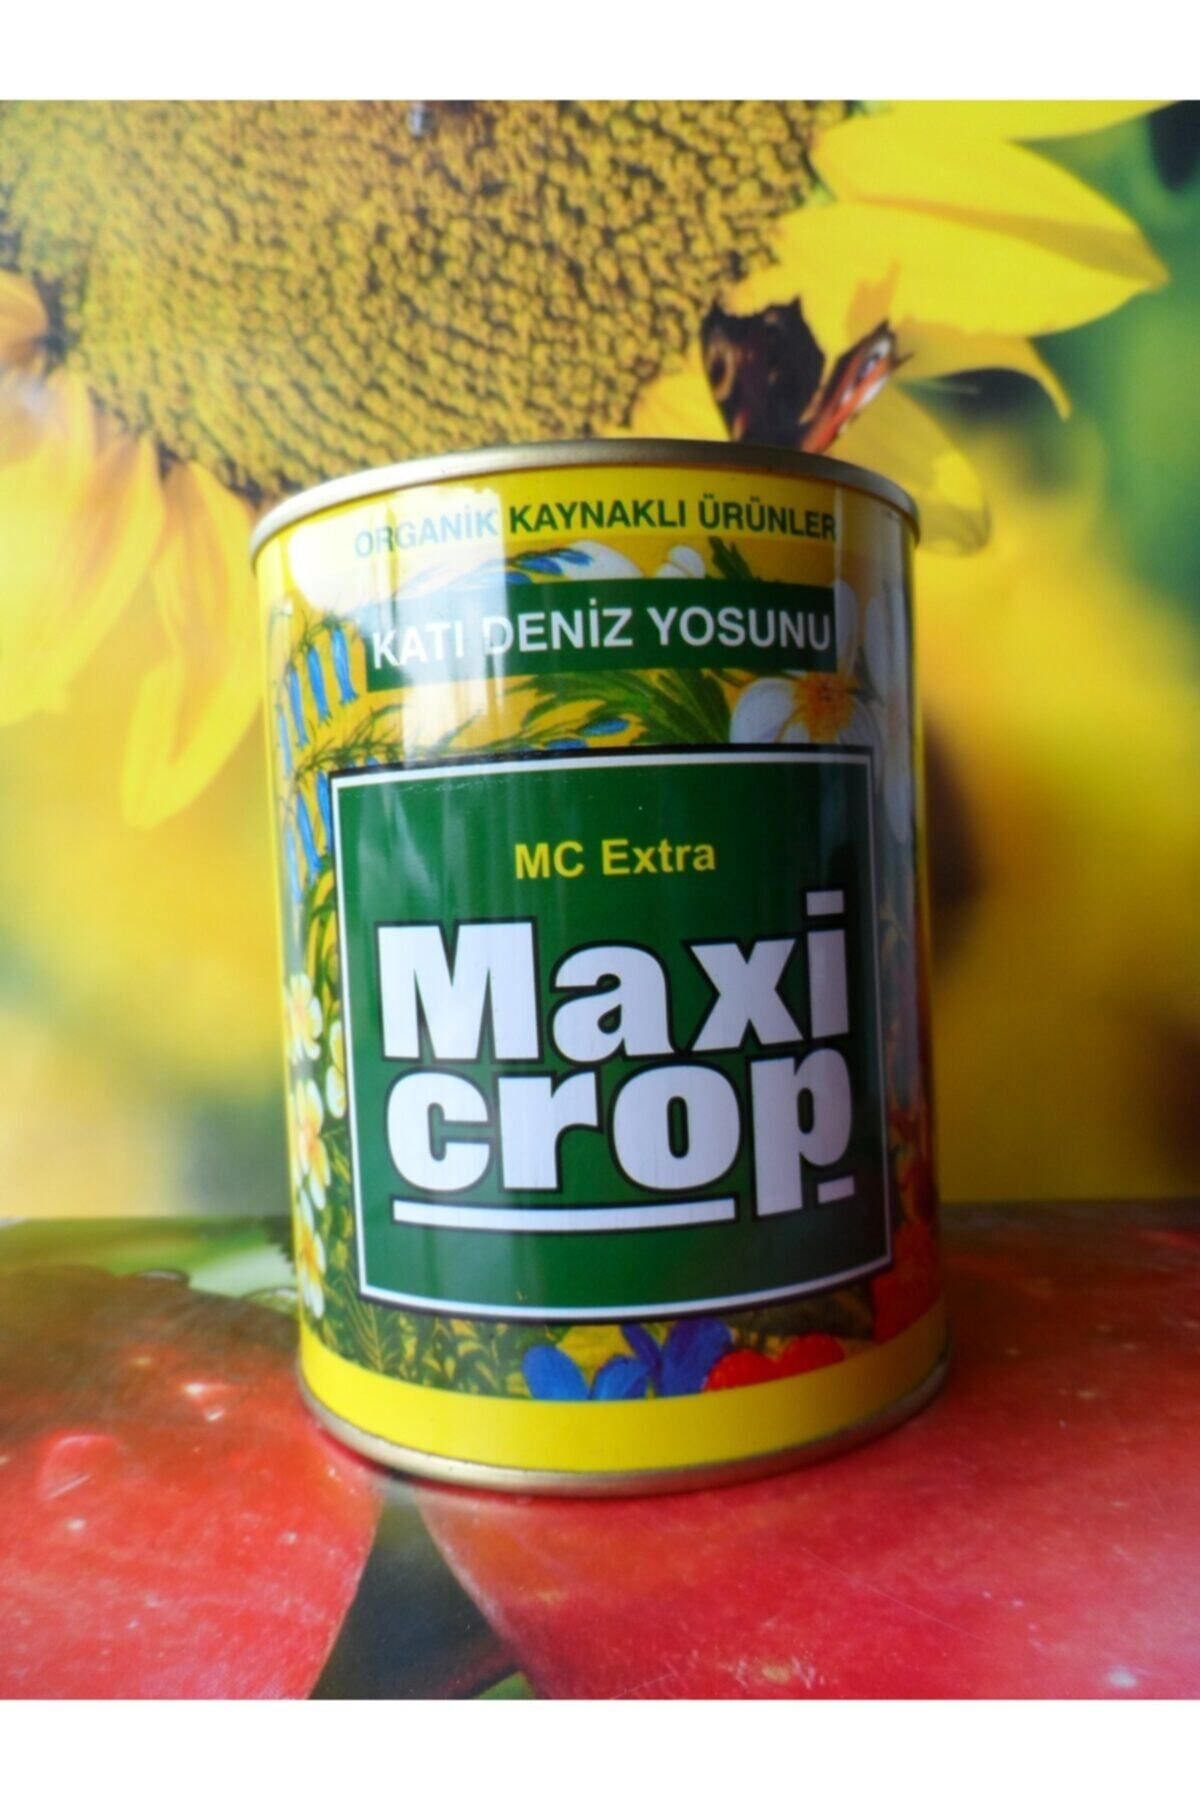 maxicrop Maxi Crop Katı Deniz Yosunu 400 Gr